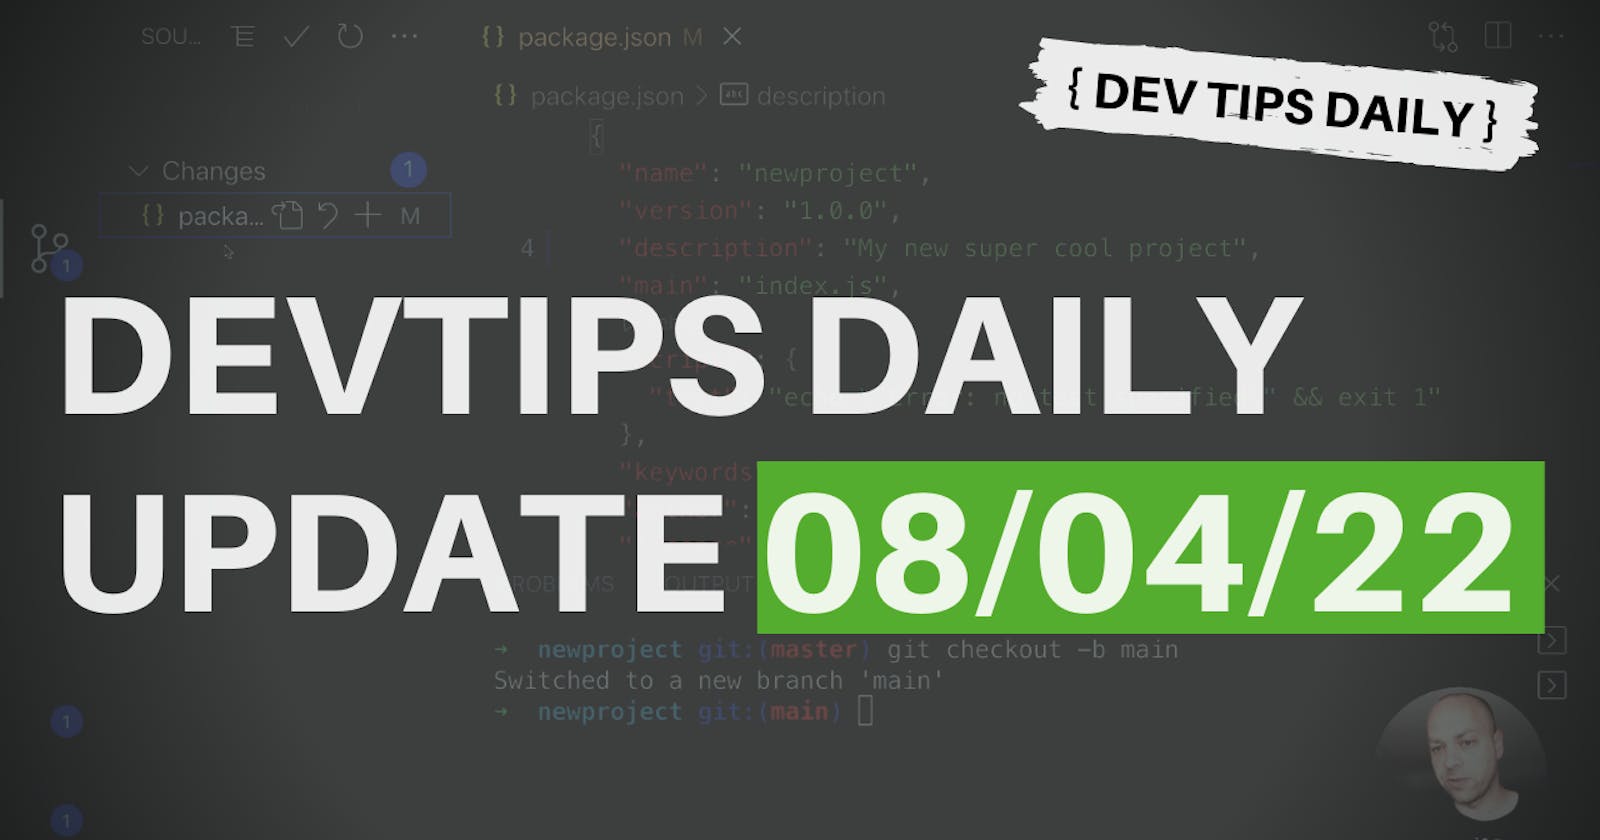 DevTips Daily Update 08/04/22